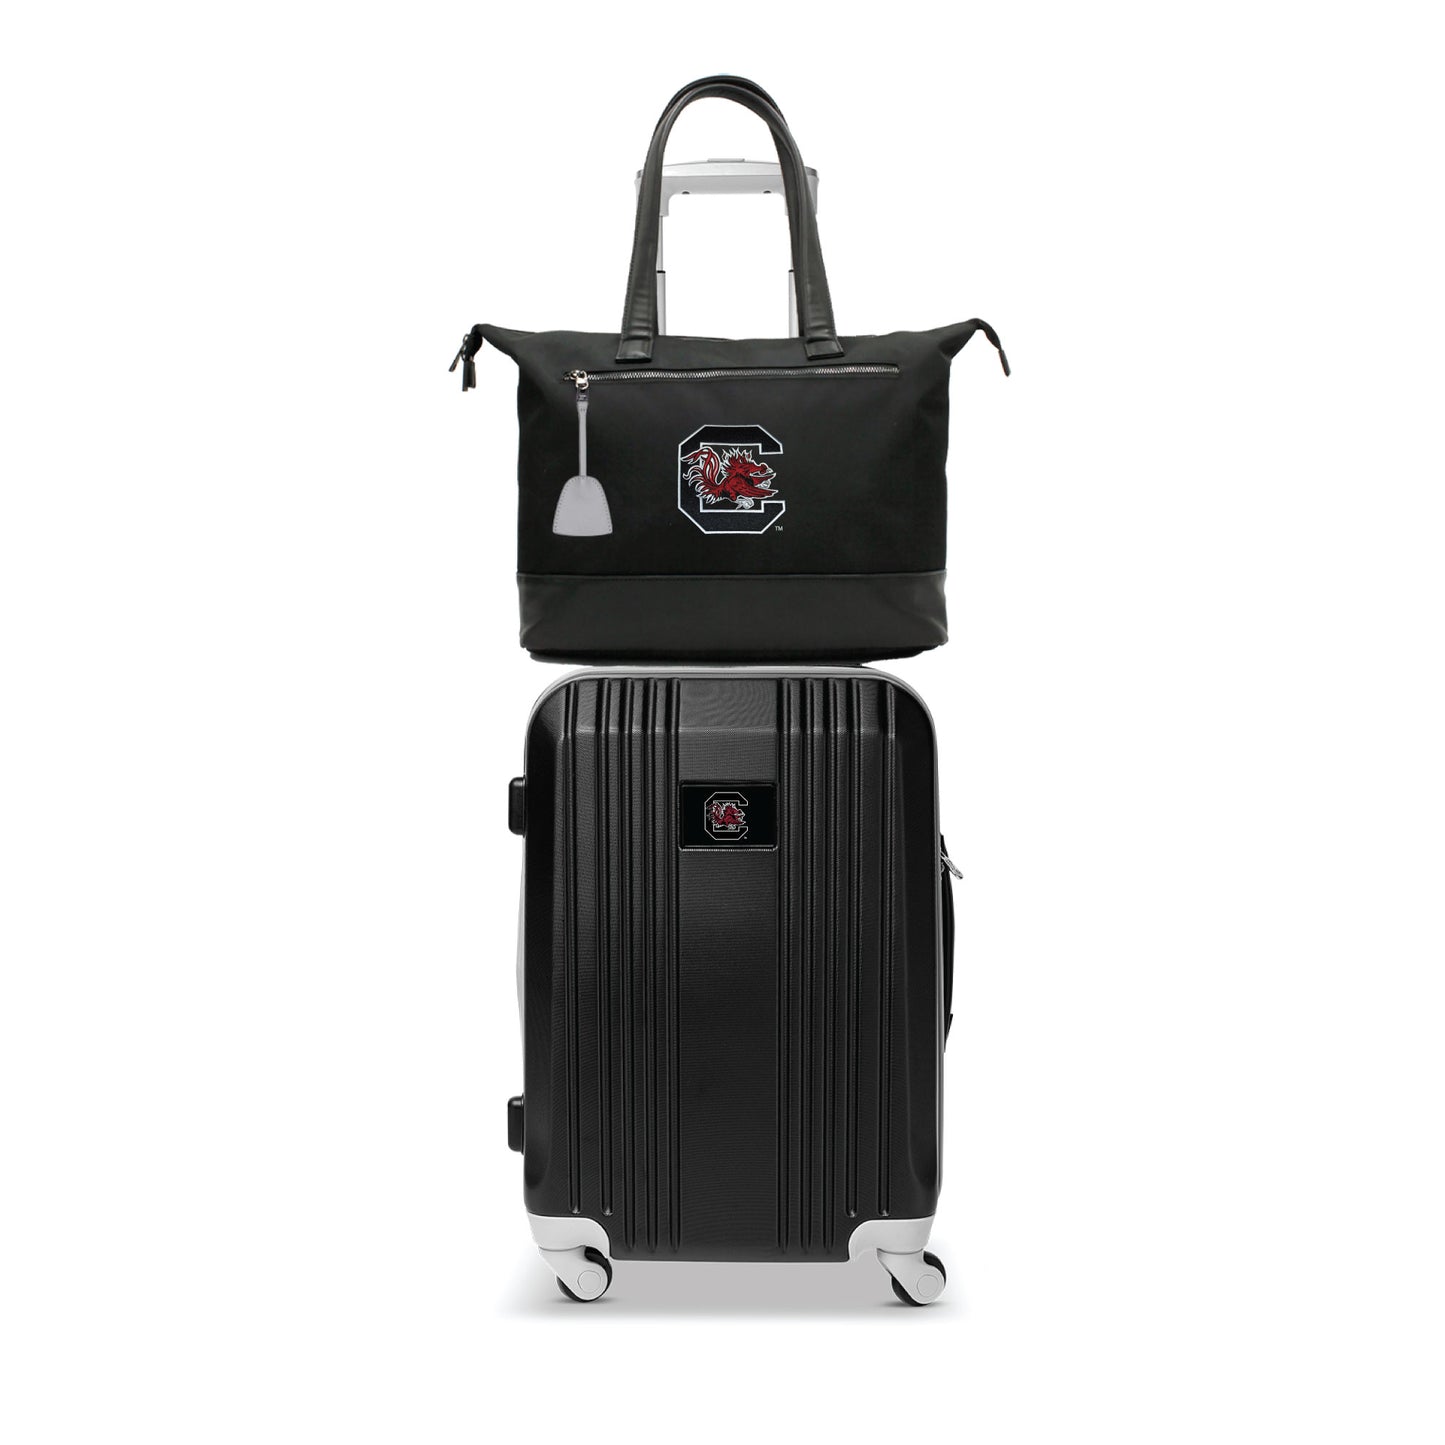 South Carolina Gamecocks Premium Laptop Tote Bag and Luggage Set